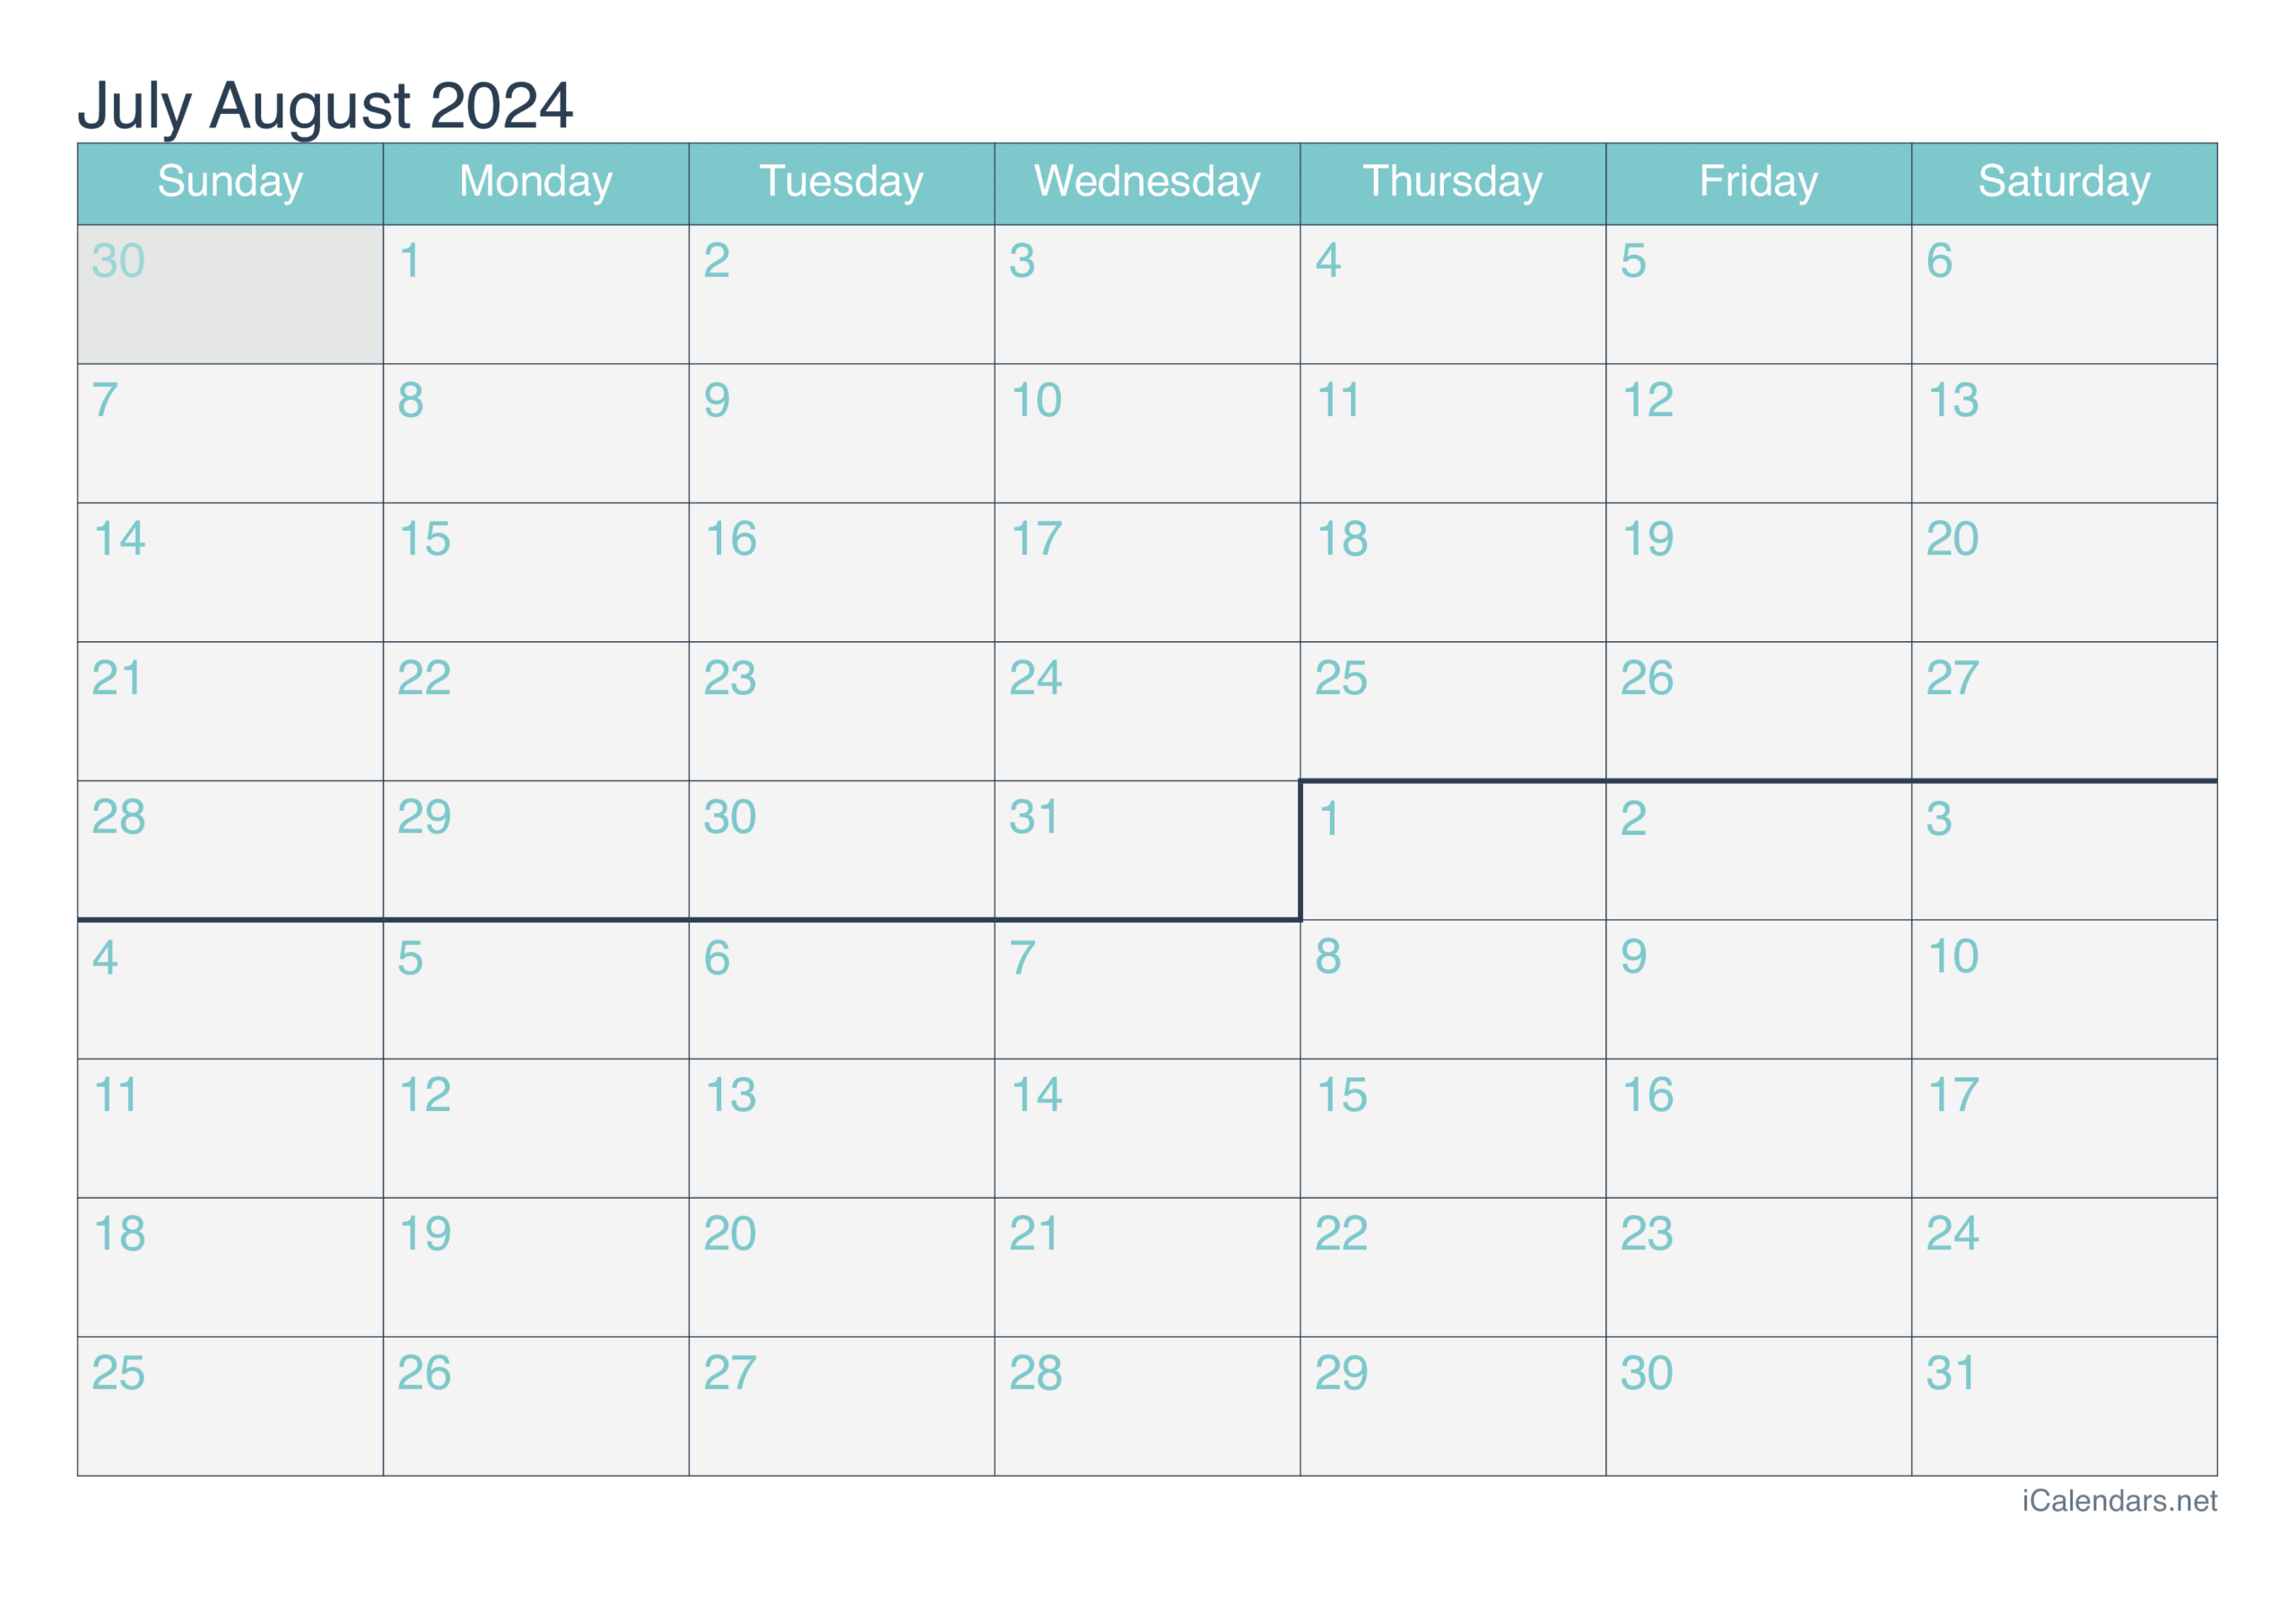 July And August 2024 Printable Calendar regarding Calendar For July August 2024